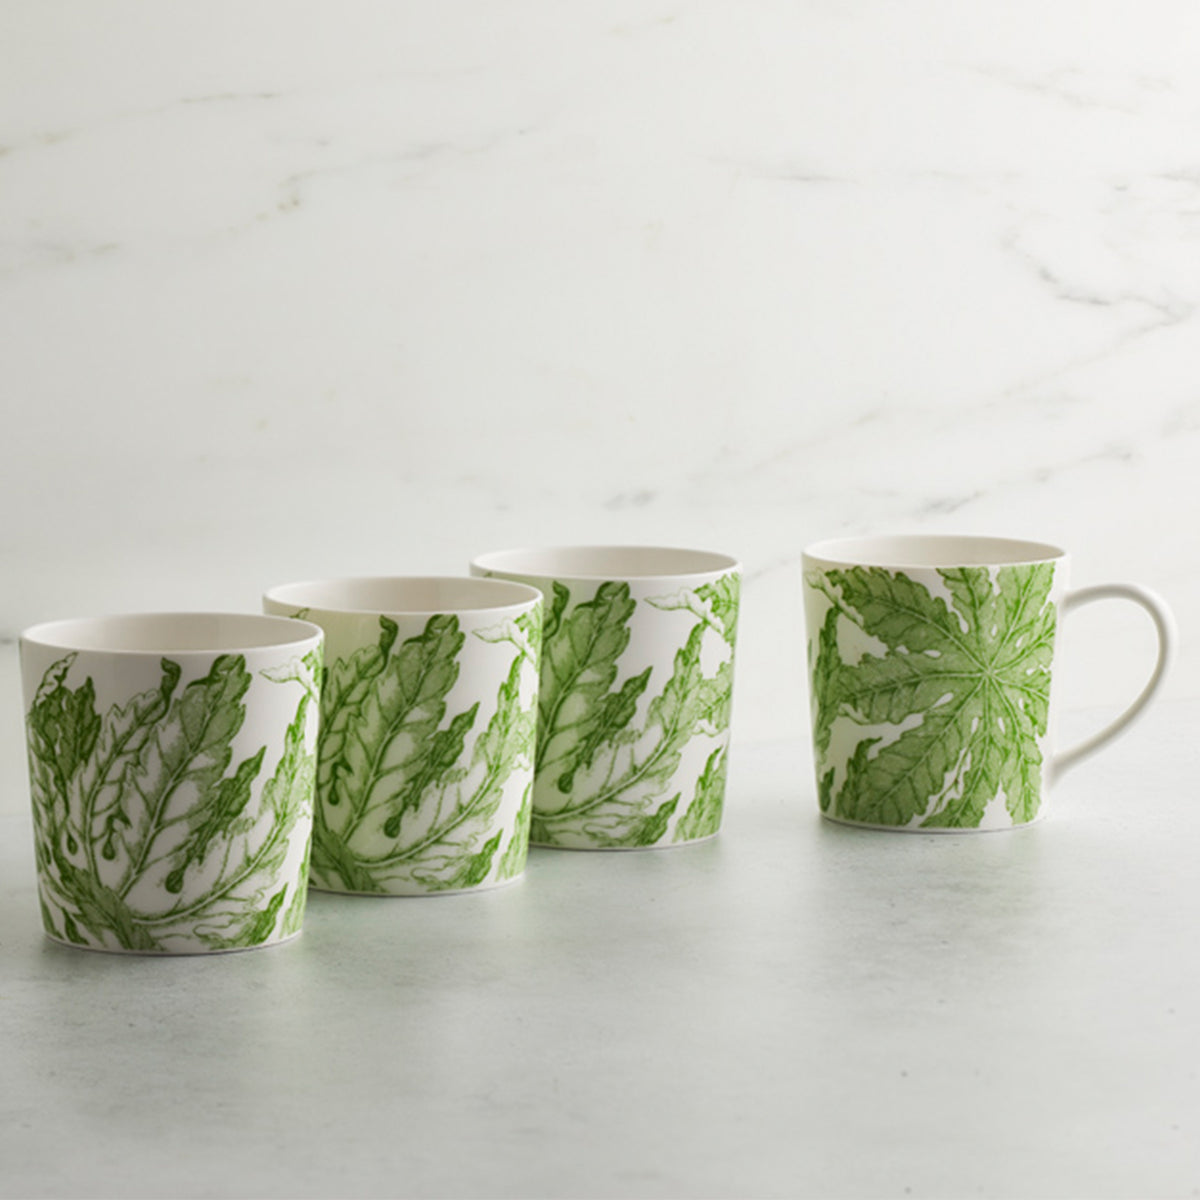 Four Freya mugs by Caskata Artisanal Home with leaves on them, symbolizing fertility.